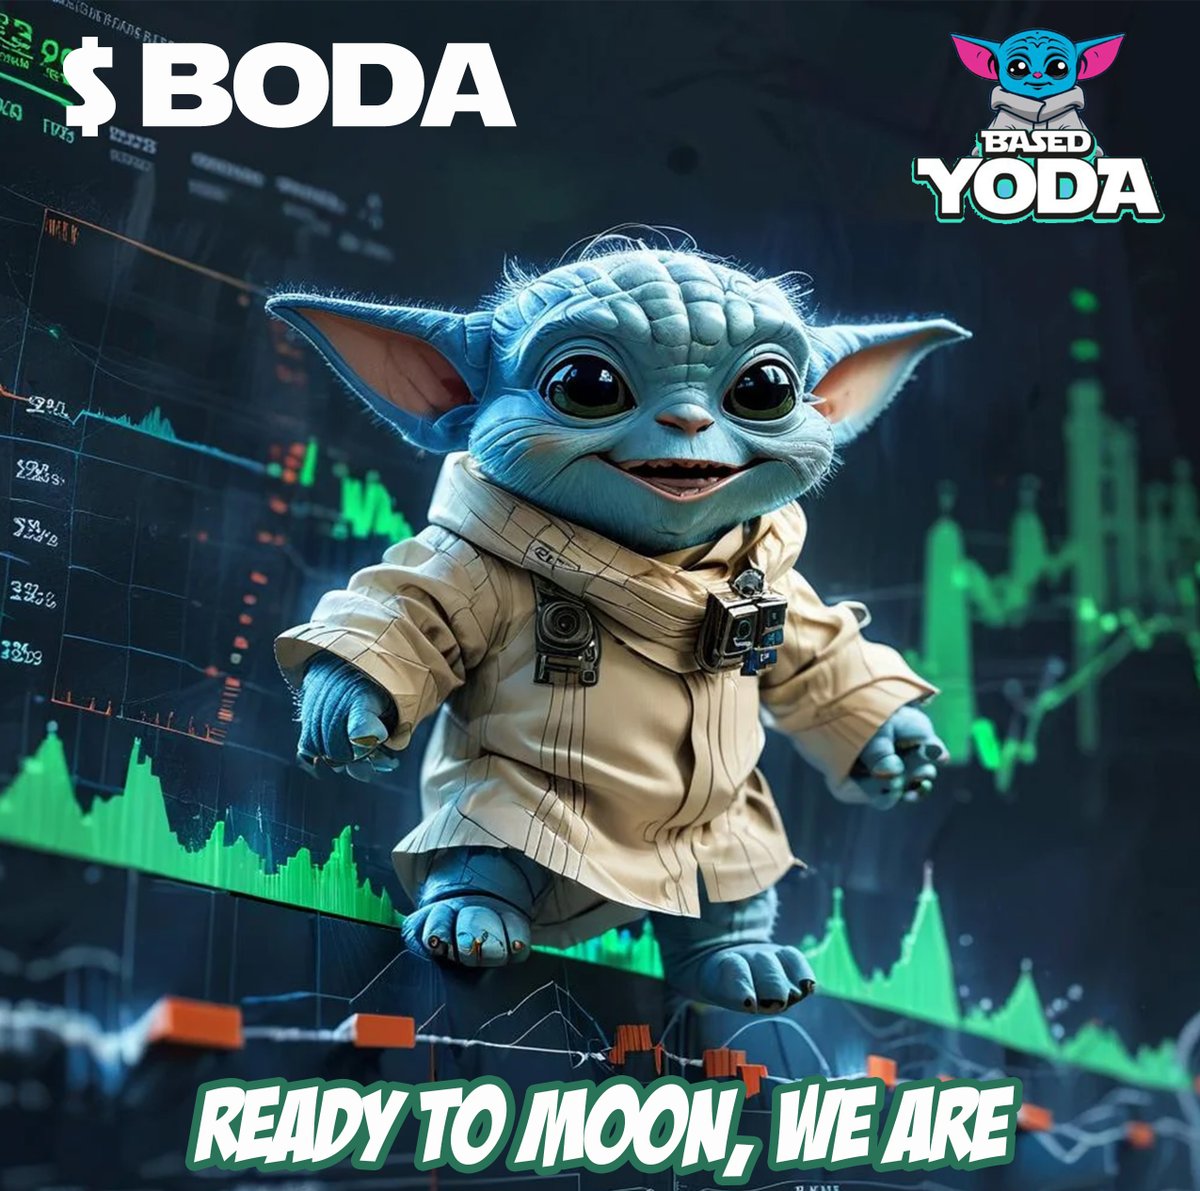 @LovLightLaugh @davidgokhshtein @YodaBase $BODA is Roaring! 🔥🔥🔥#starwars #basedyoda #memewars #beyondbillions @YodaBase